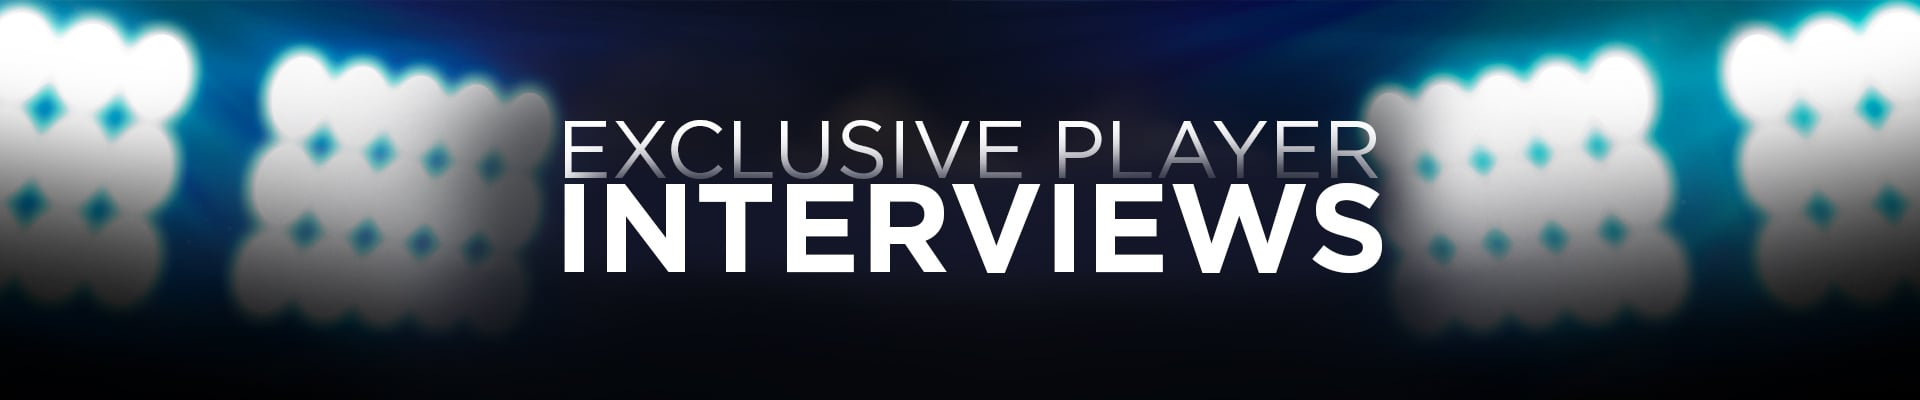 Exclusive Player Interviews